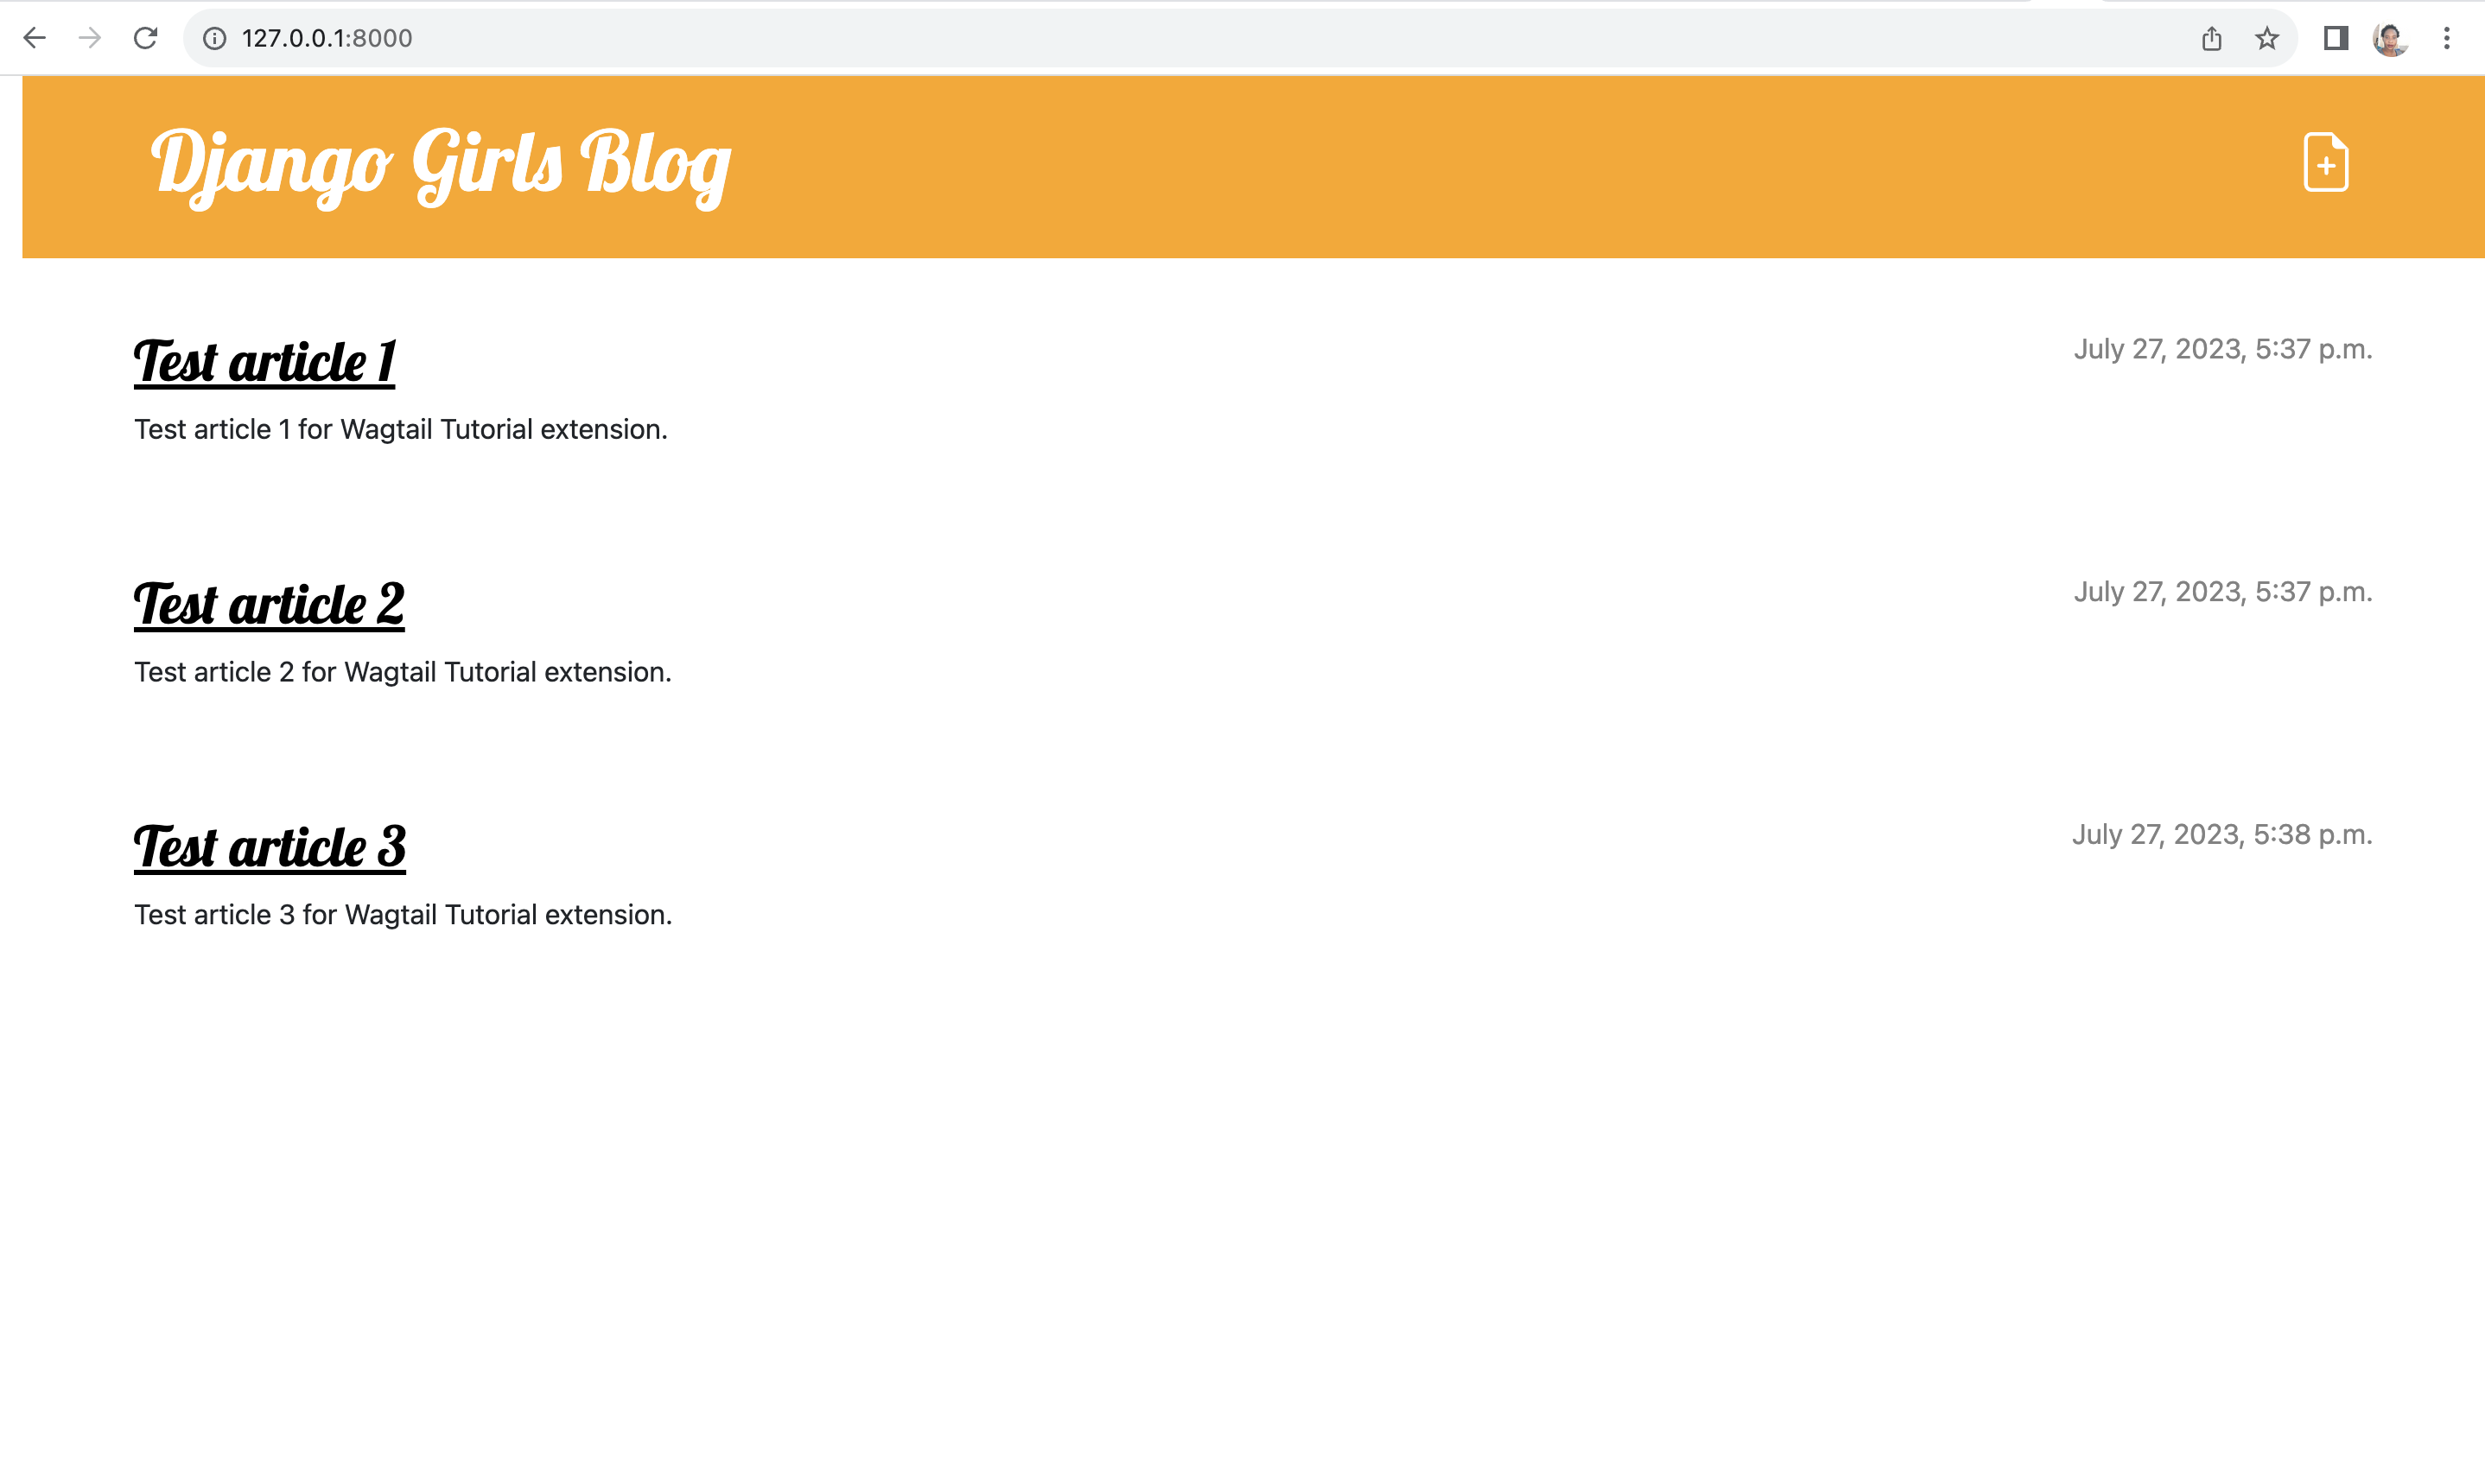 Blog homepage